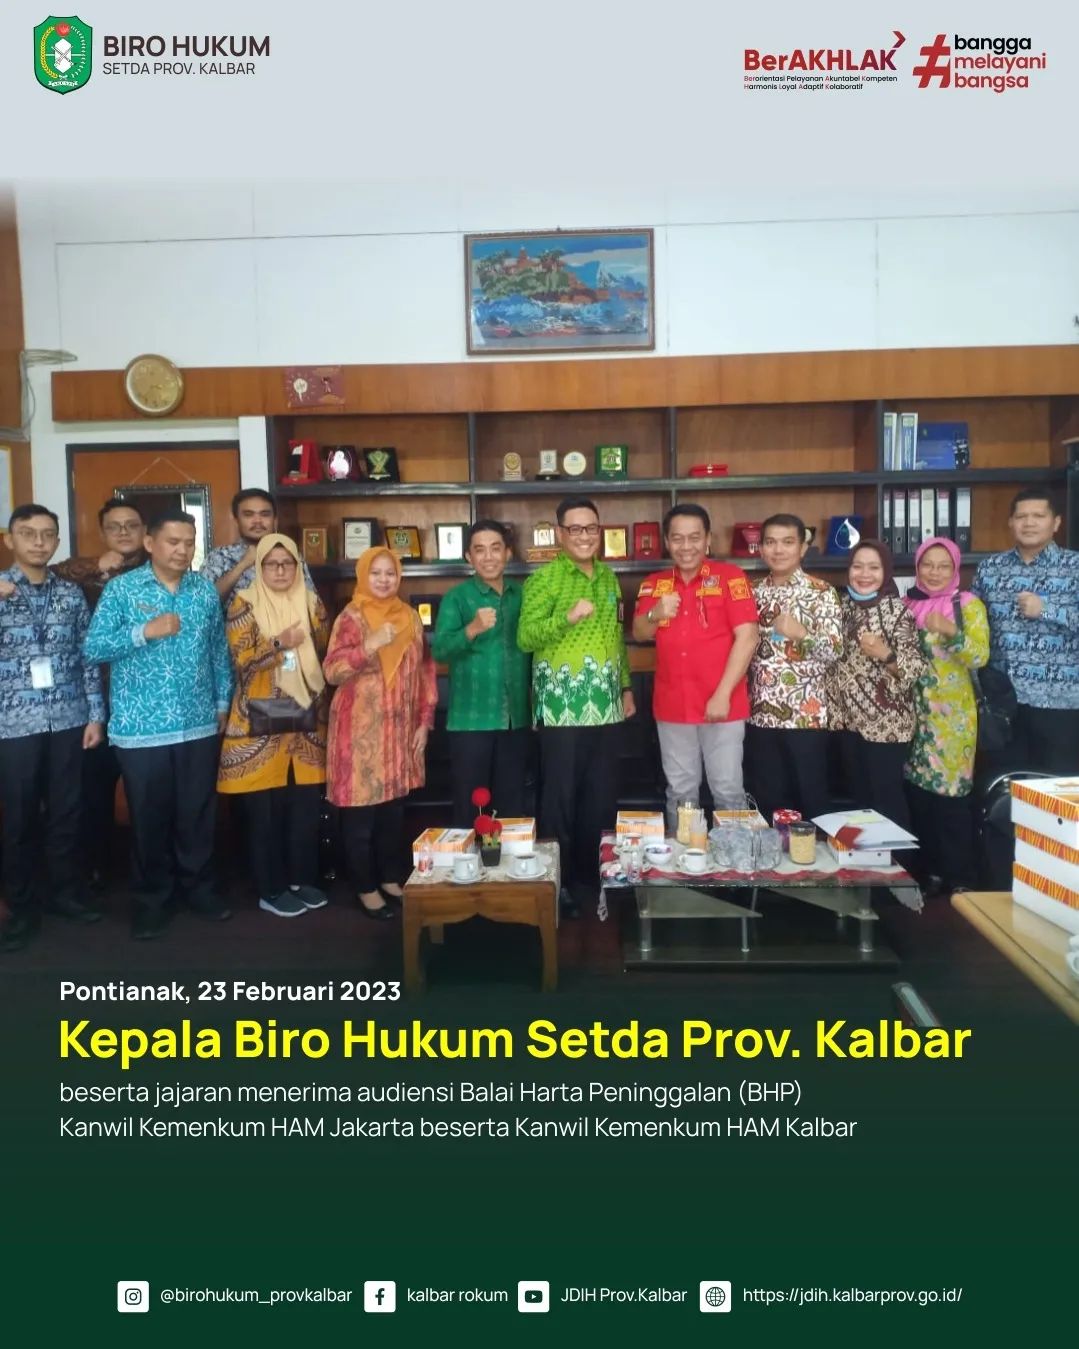 Biro Hukum Setda Prov. KalBar Terima Audiensi Balai Harta Peninggalan (BHP) Kanwil Kemenkum HAM Jakarta beserta Kanwil Kemenkum HAM Kalbar